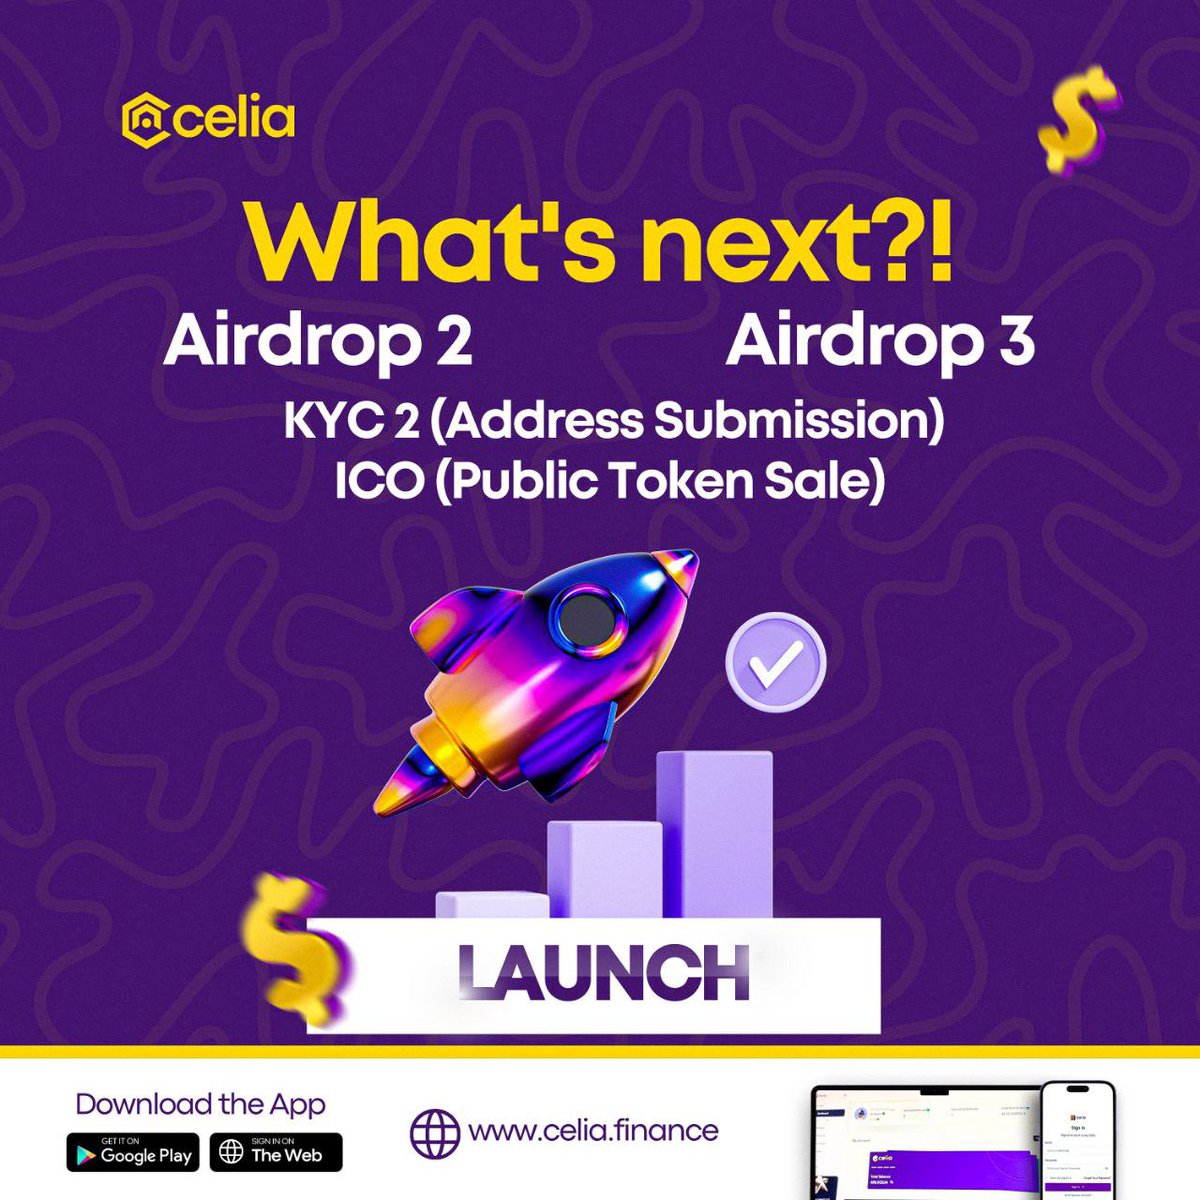 The Celia Roadmap remains unchanged
What’s next?! 🤔
1️⃣ Airdrop 2
2️⃣ Airdrop 3
3️⃣ KYC 2 (Address Submission)
4️⃣ ICO (Public Token Sale)
5️⃣ Launch